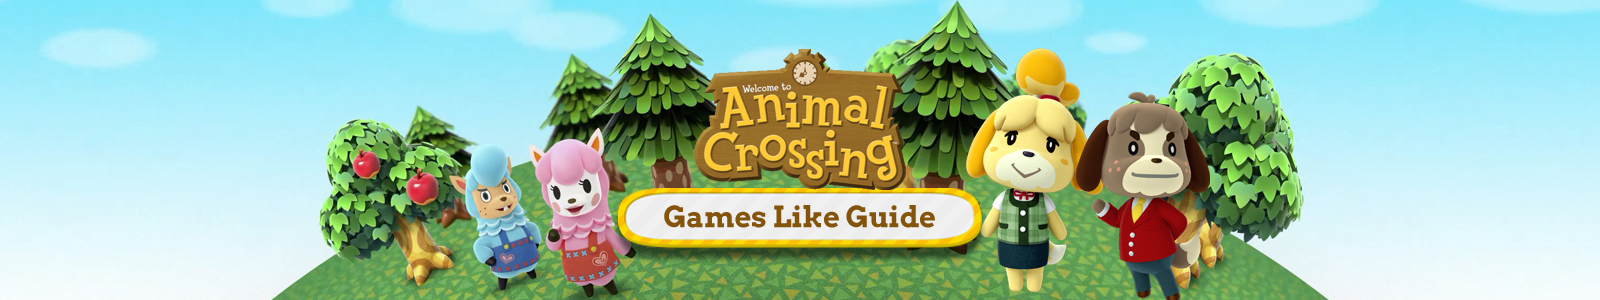 Animal Crossing New Horizons games like guide